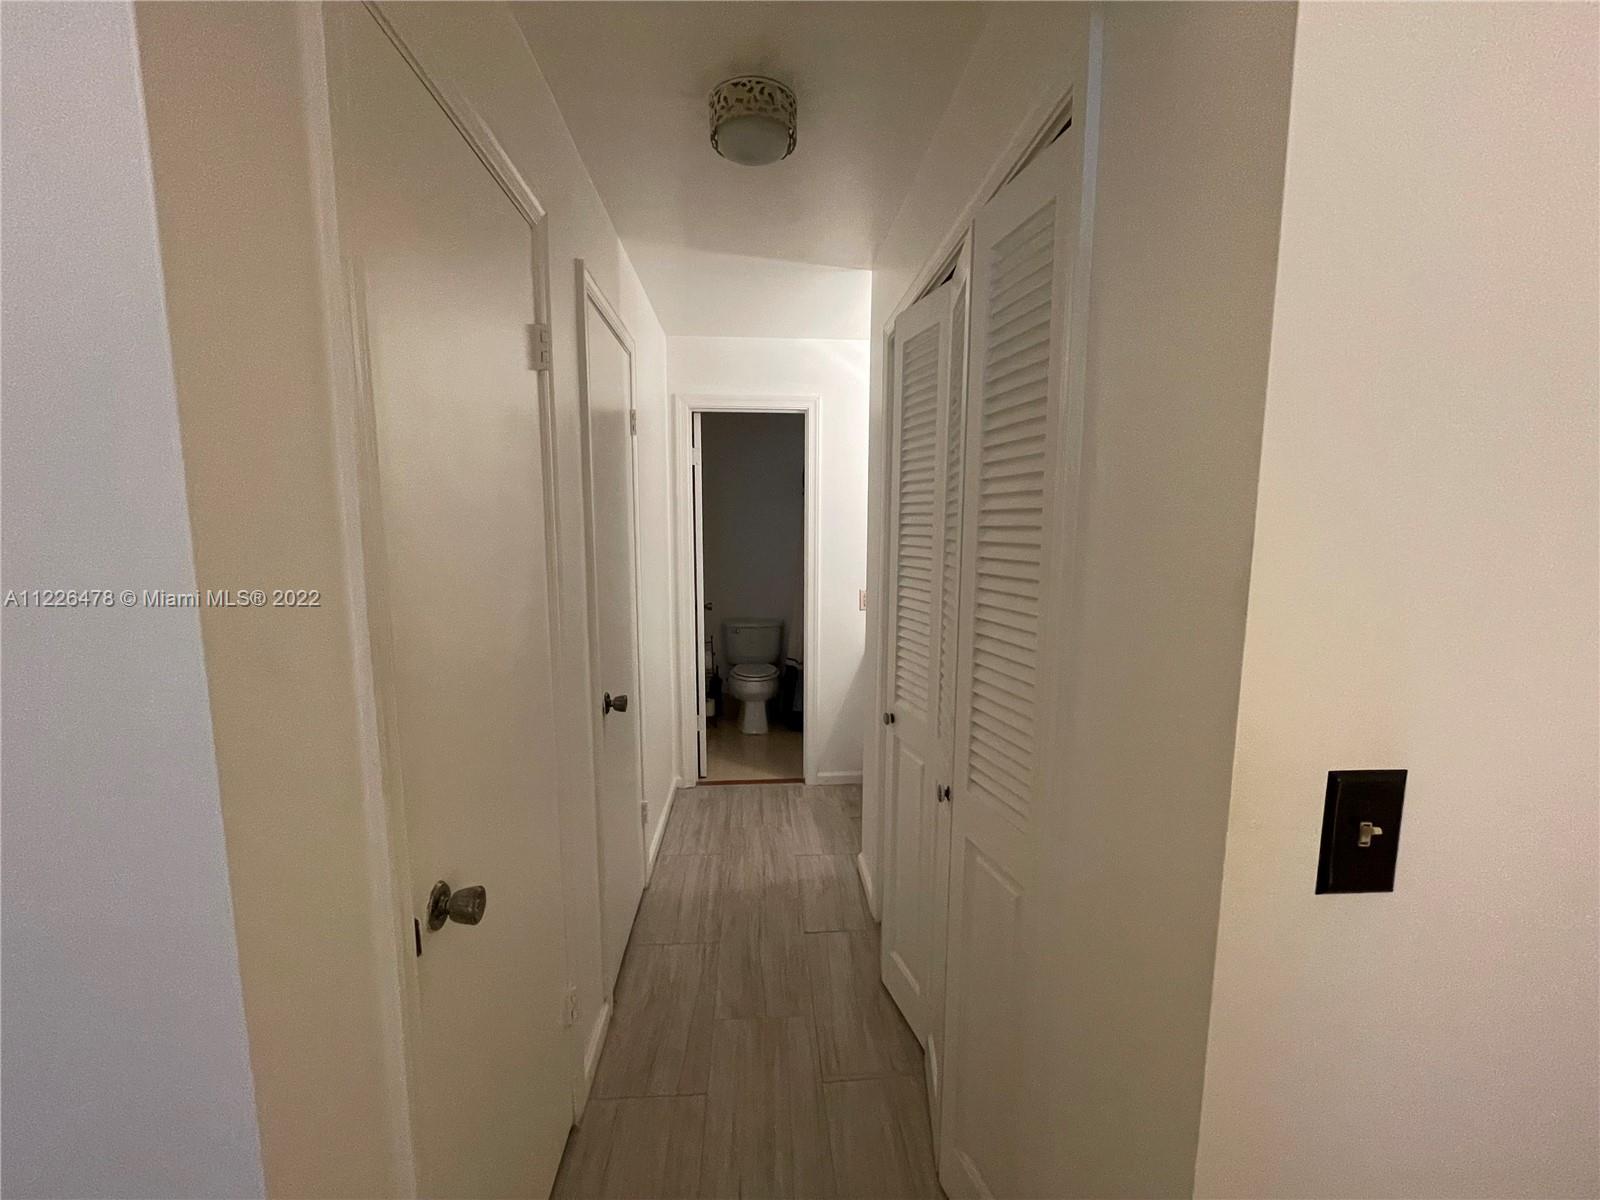 Master hallway to bathroom and closets